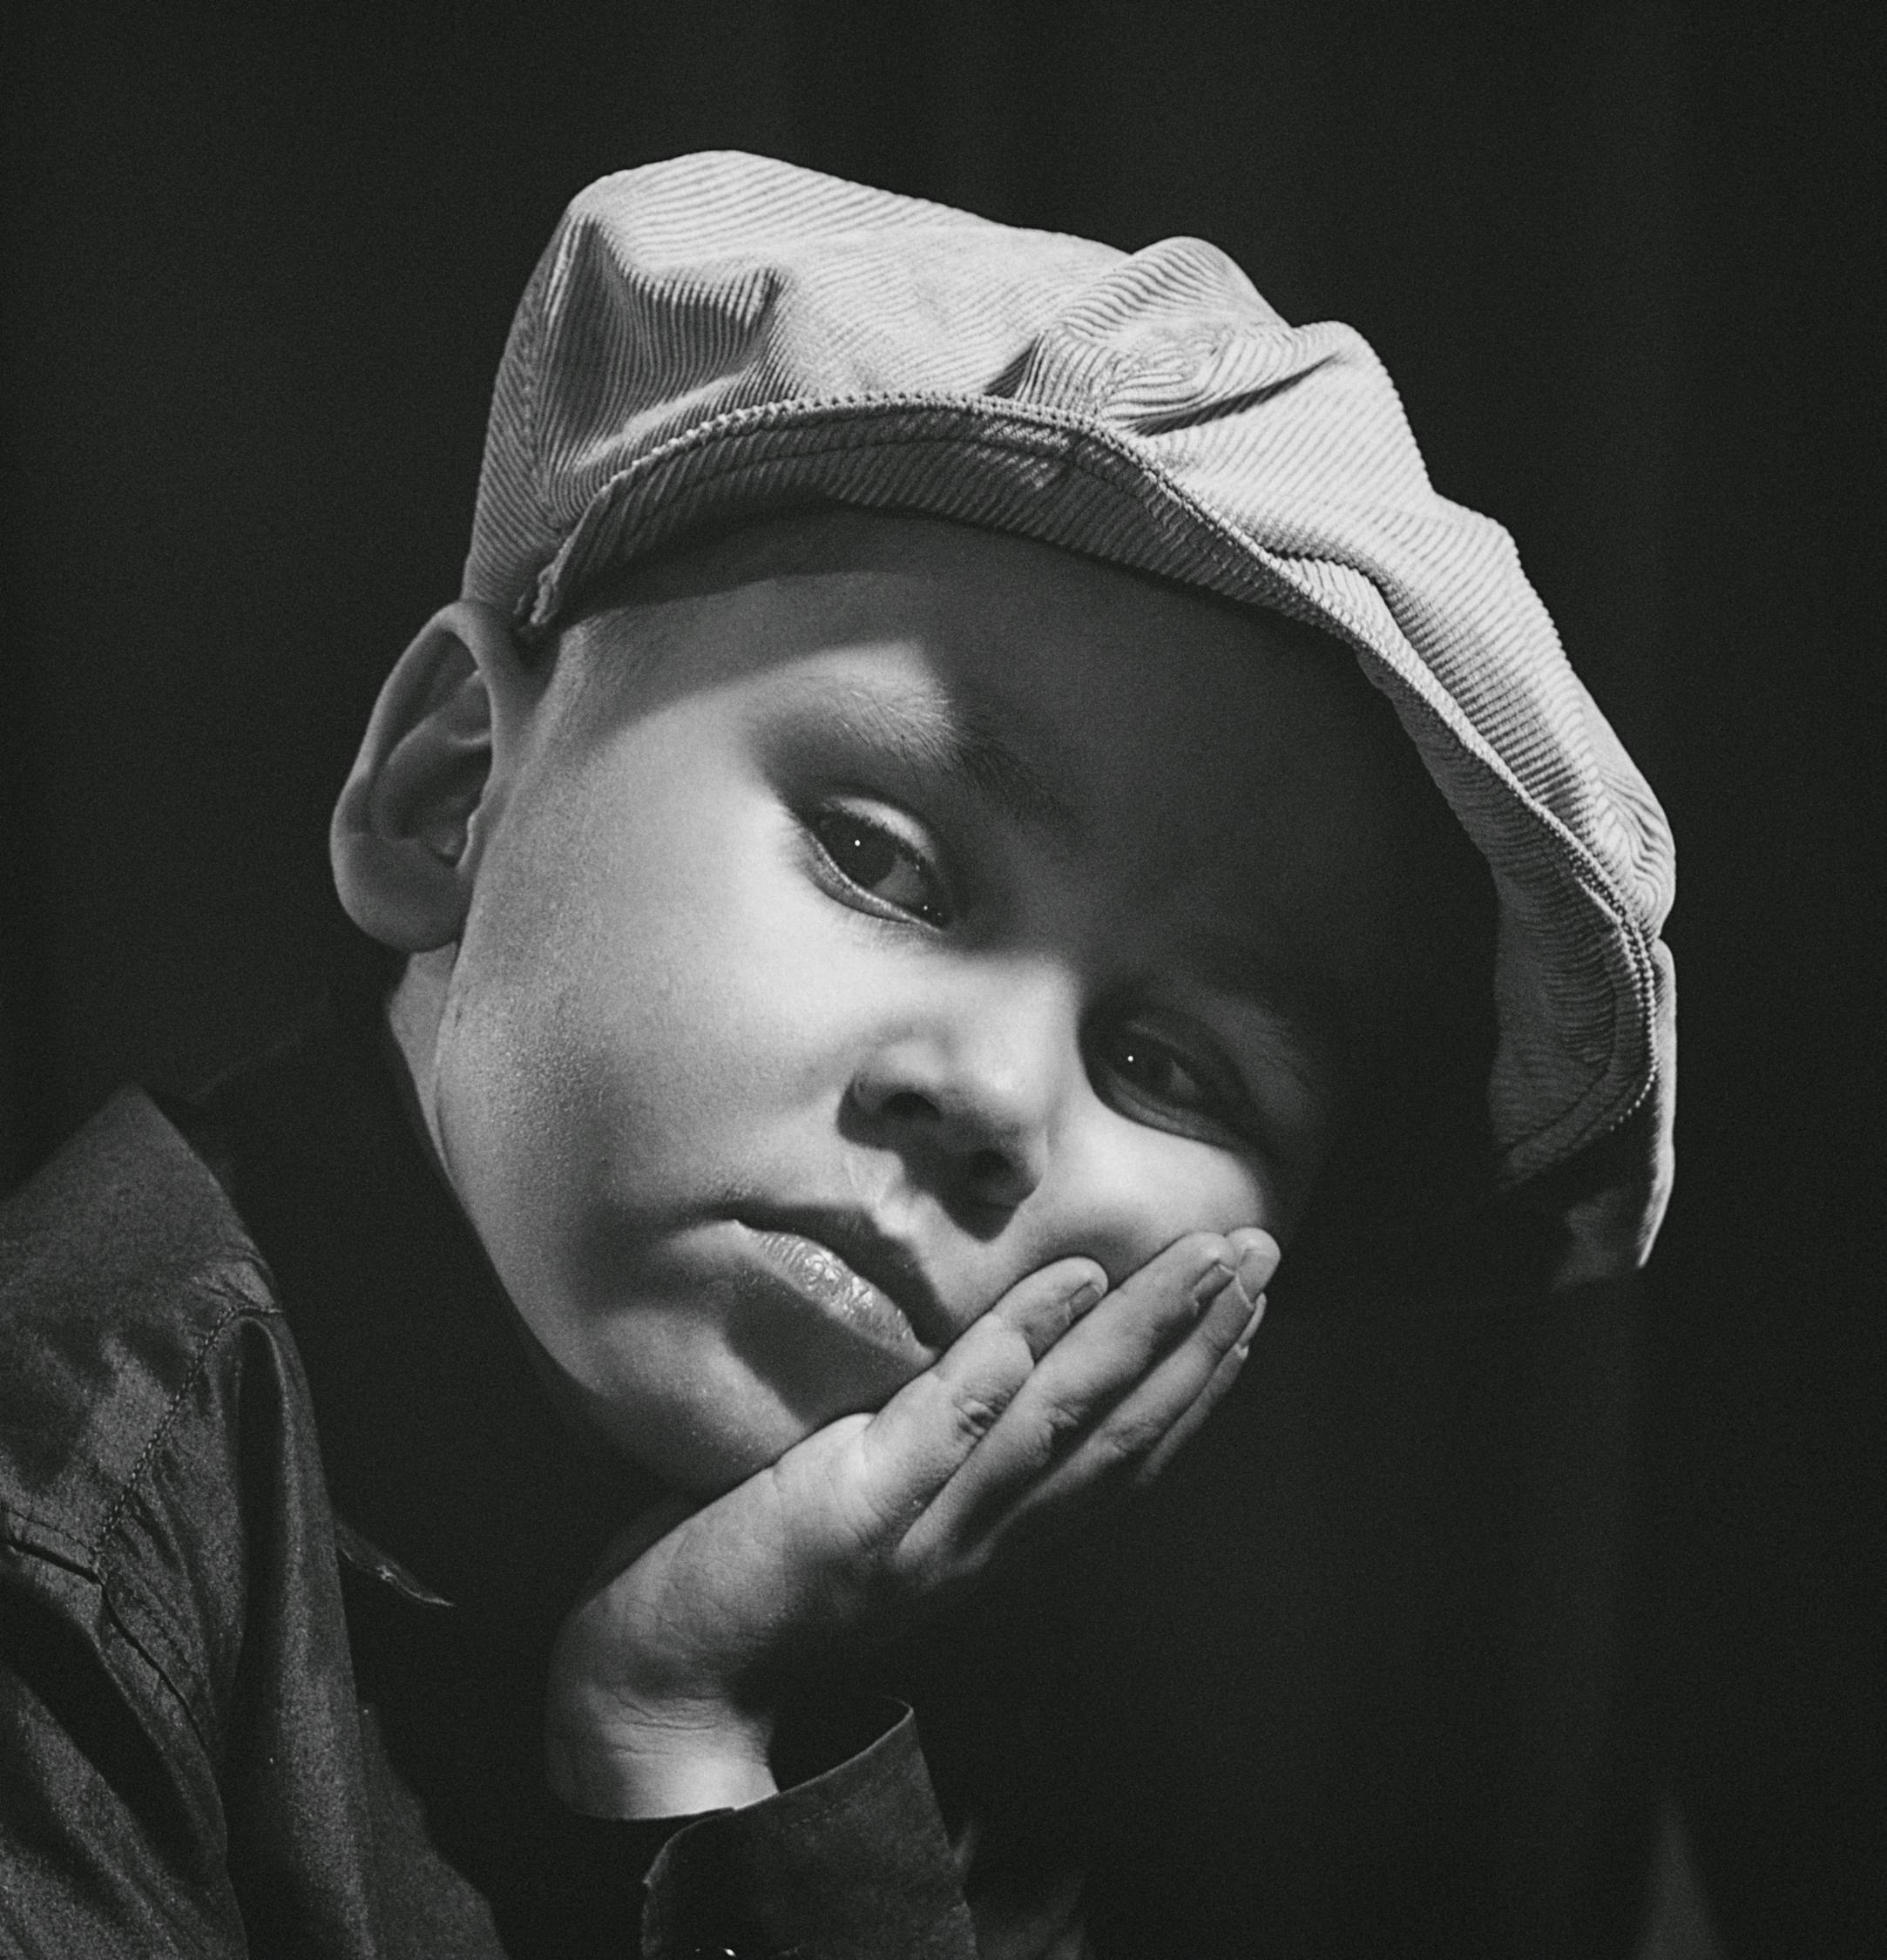 Black and White Photo of a Boy · Free Stock Photo